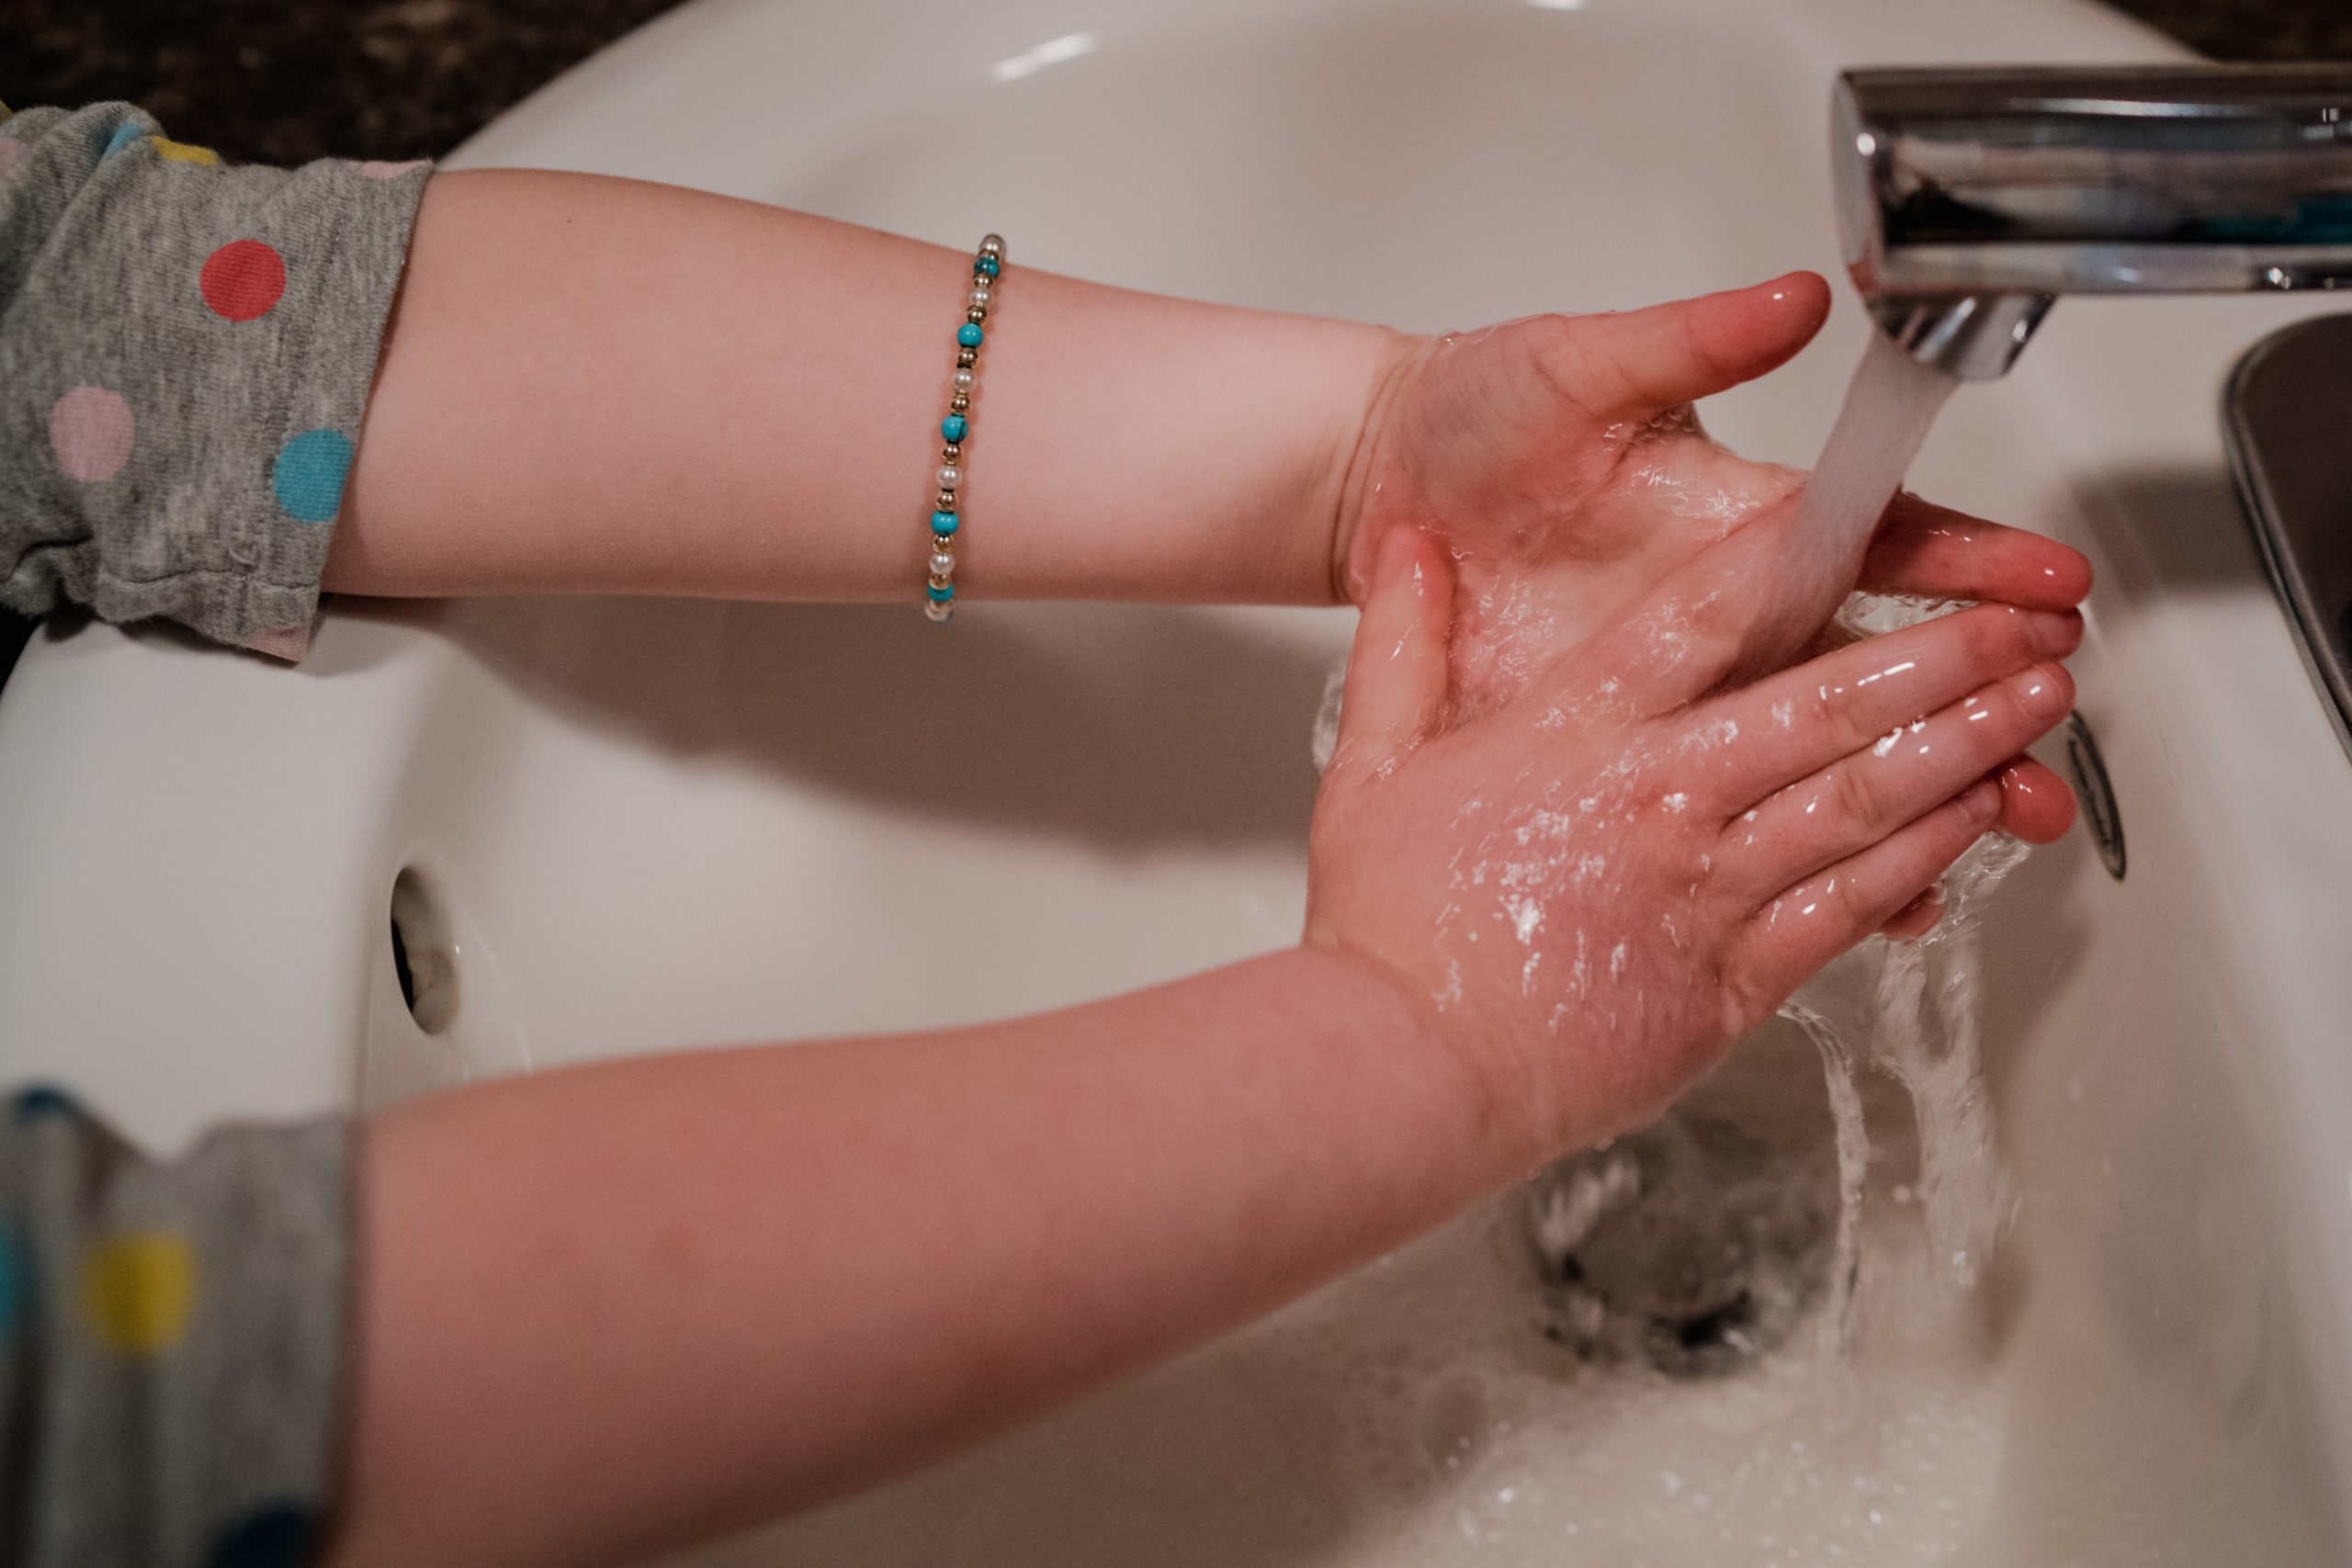 Child washing their hands at a bathroom sink.